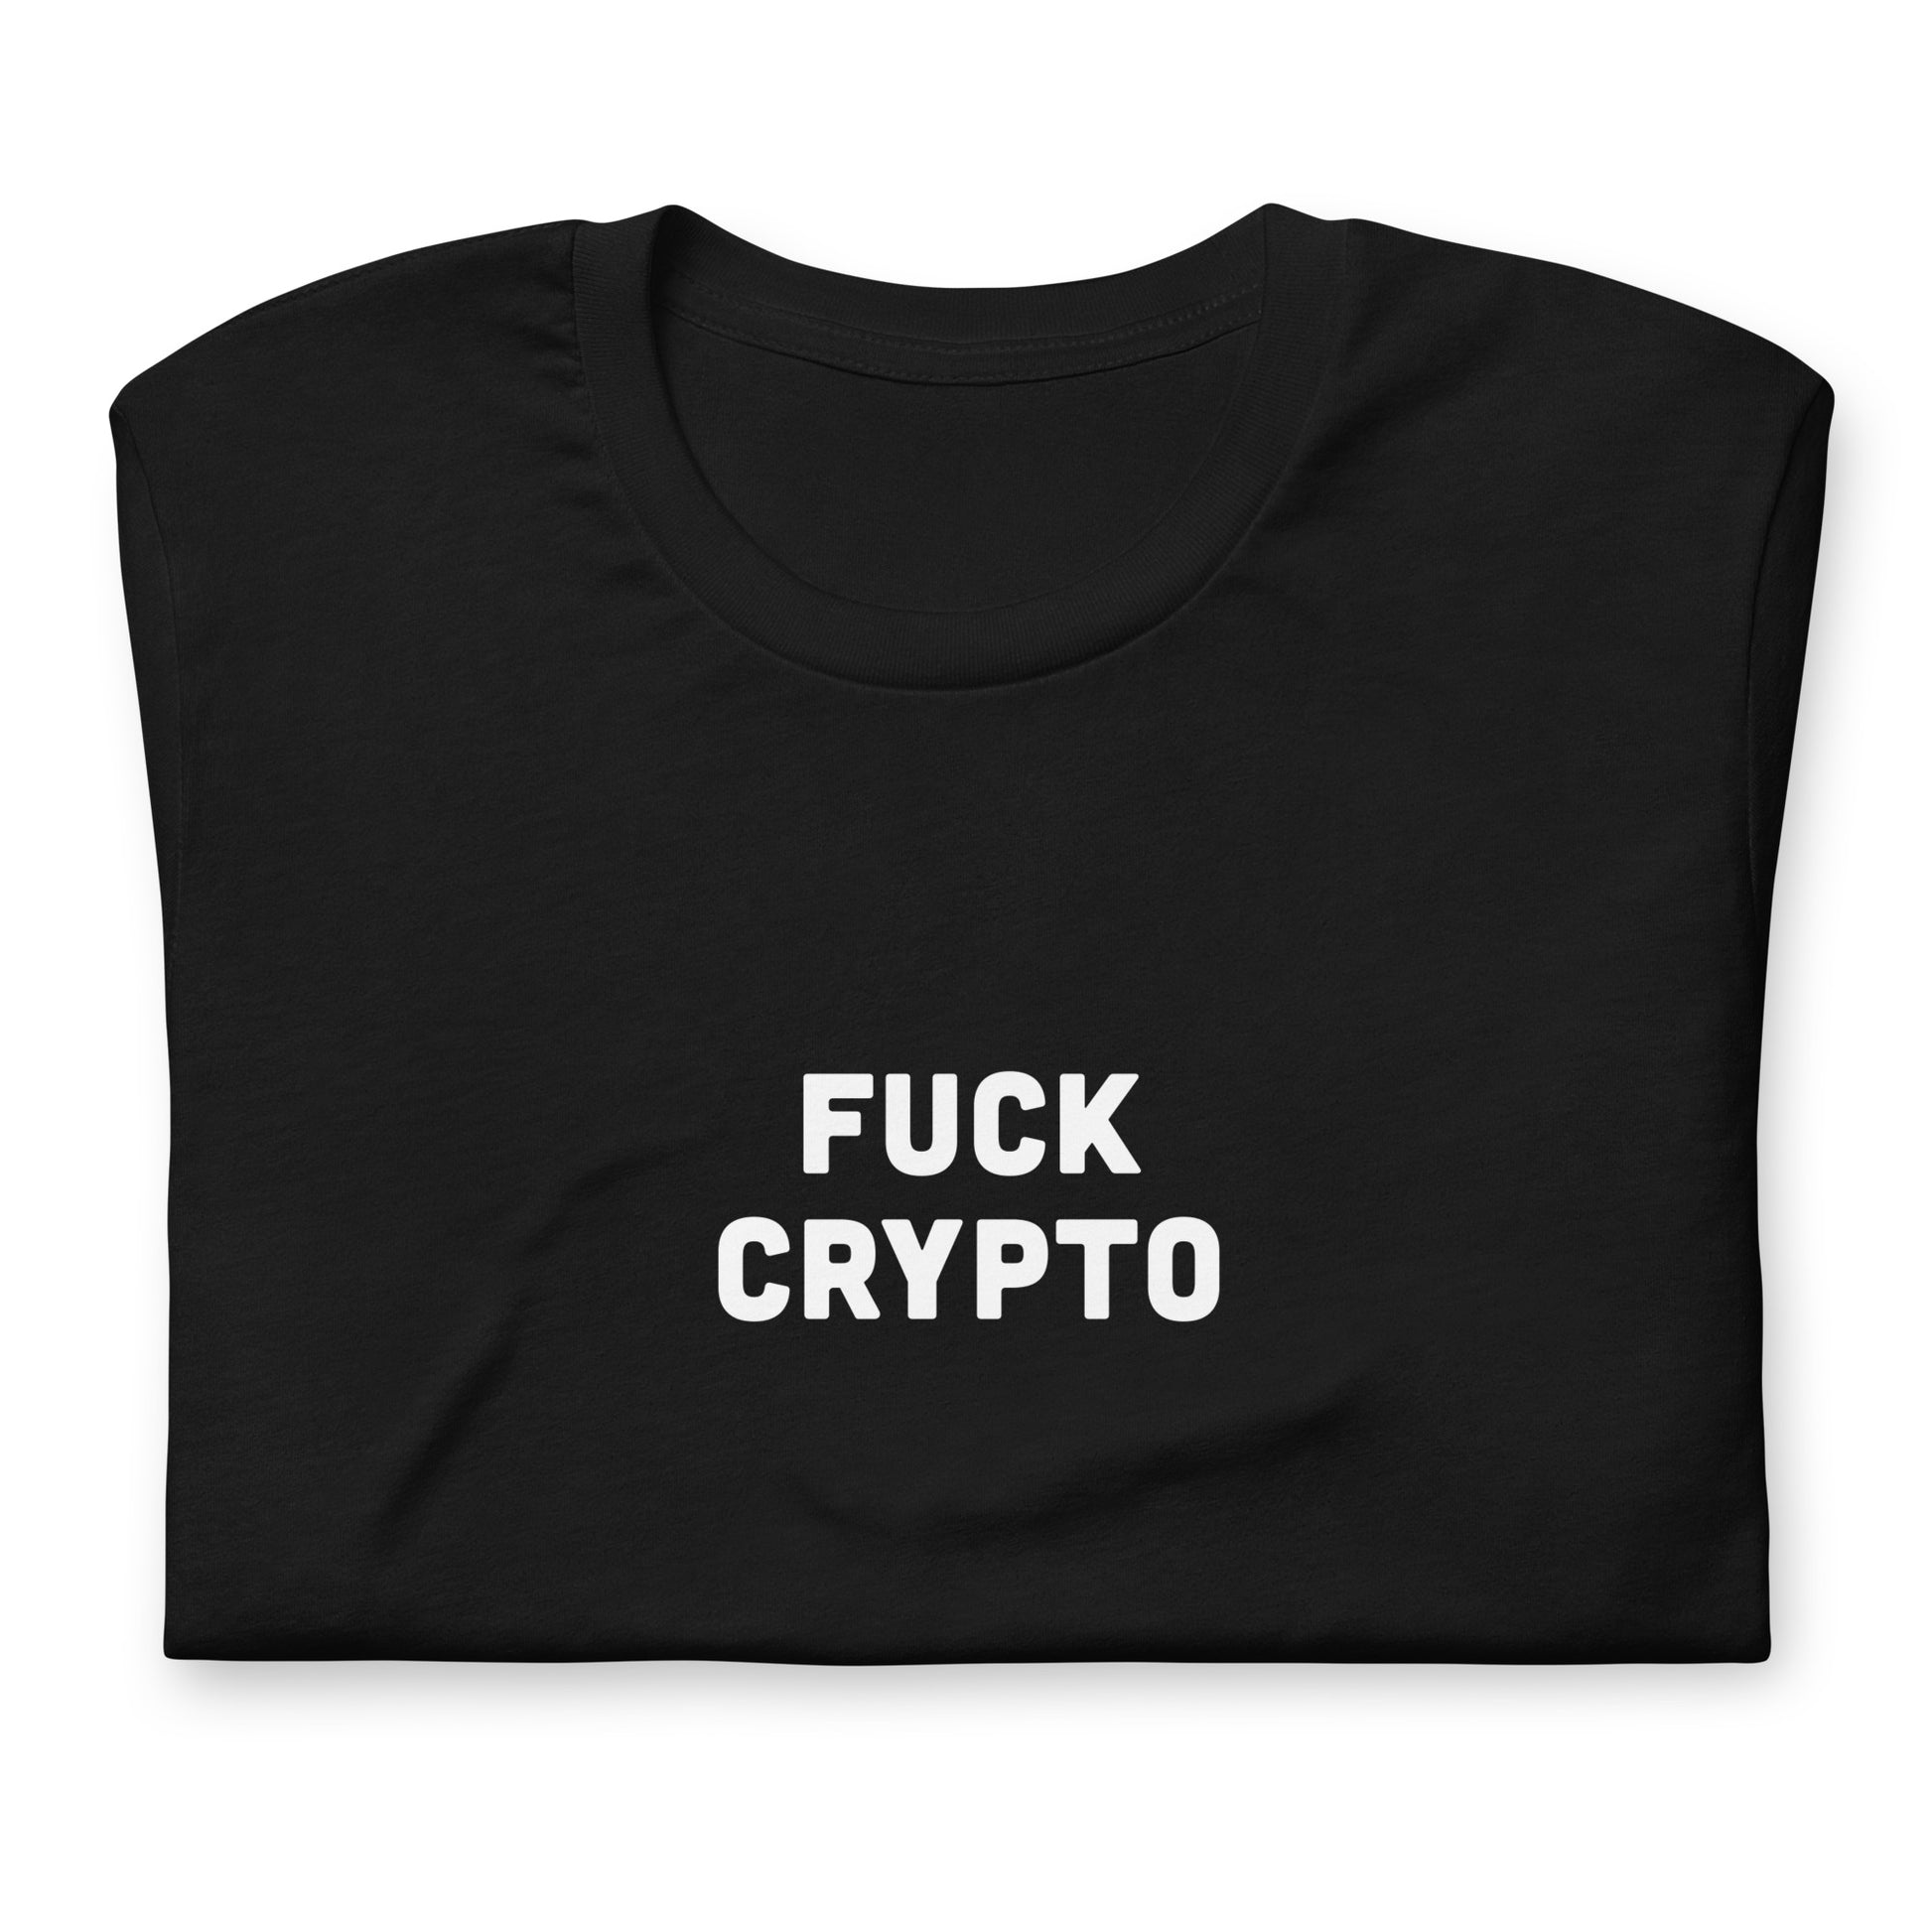 Fuck Crypto T-Shirt Size M Color Black